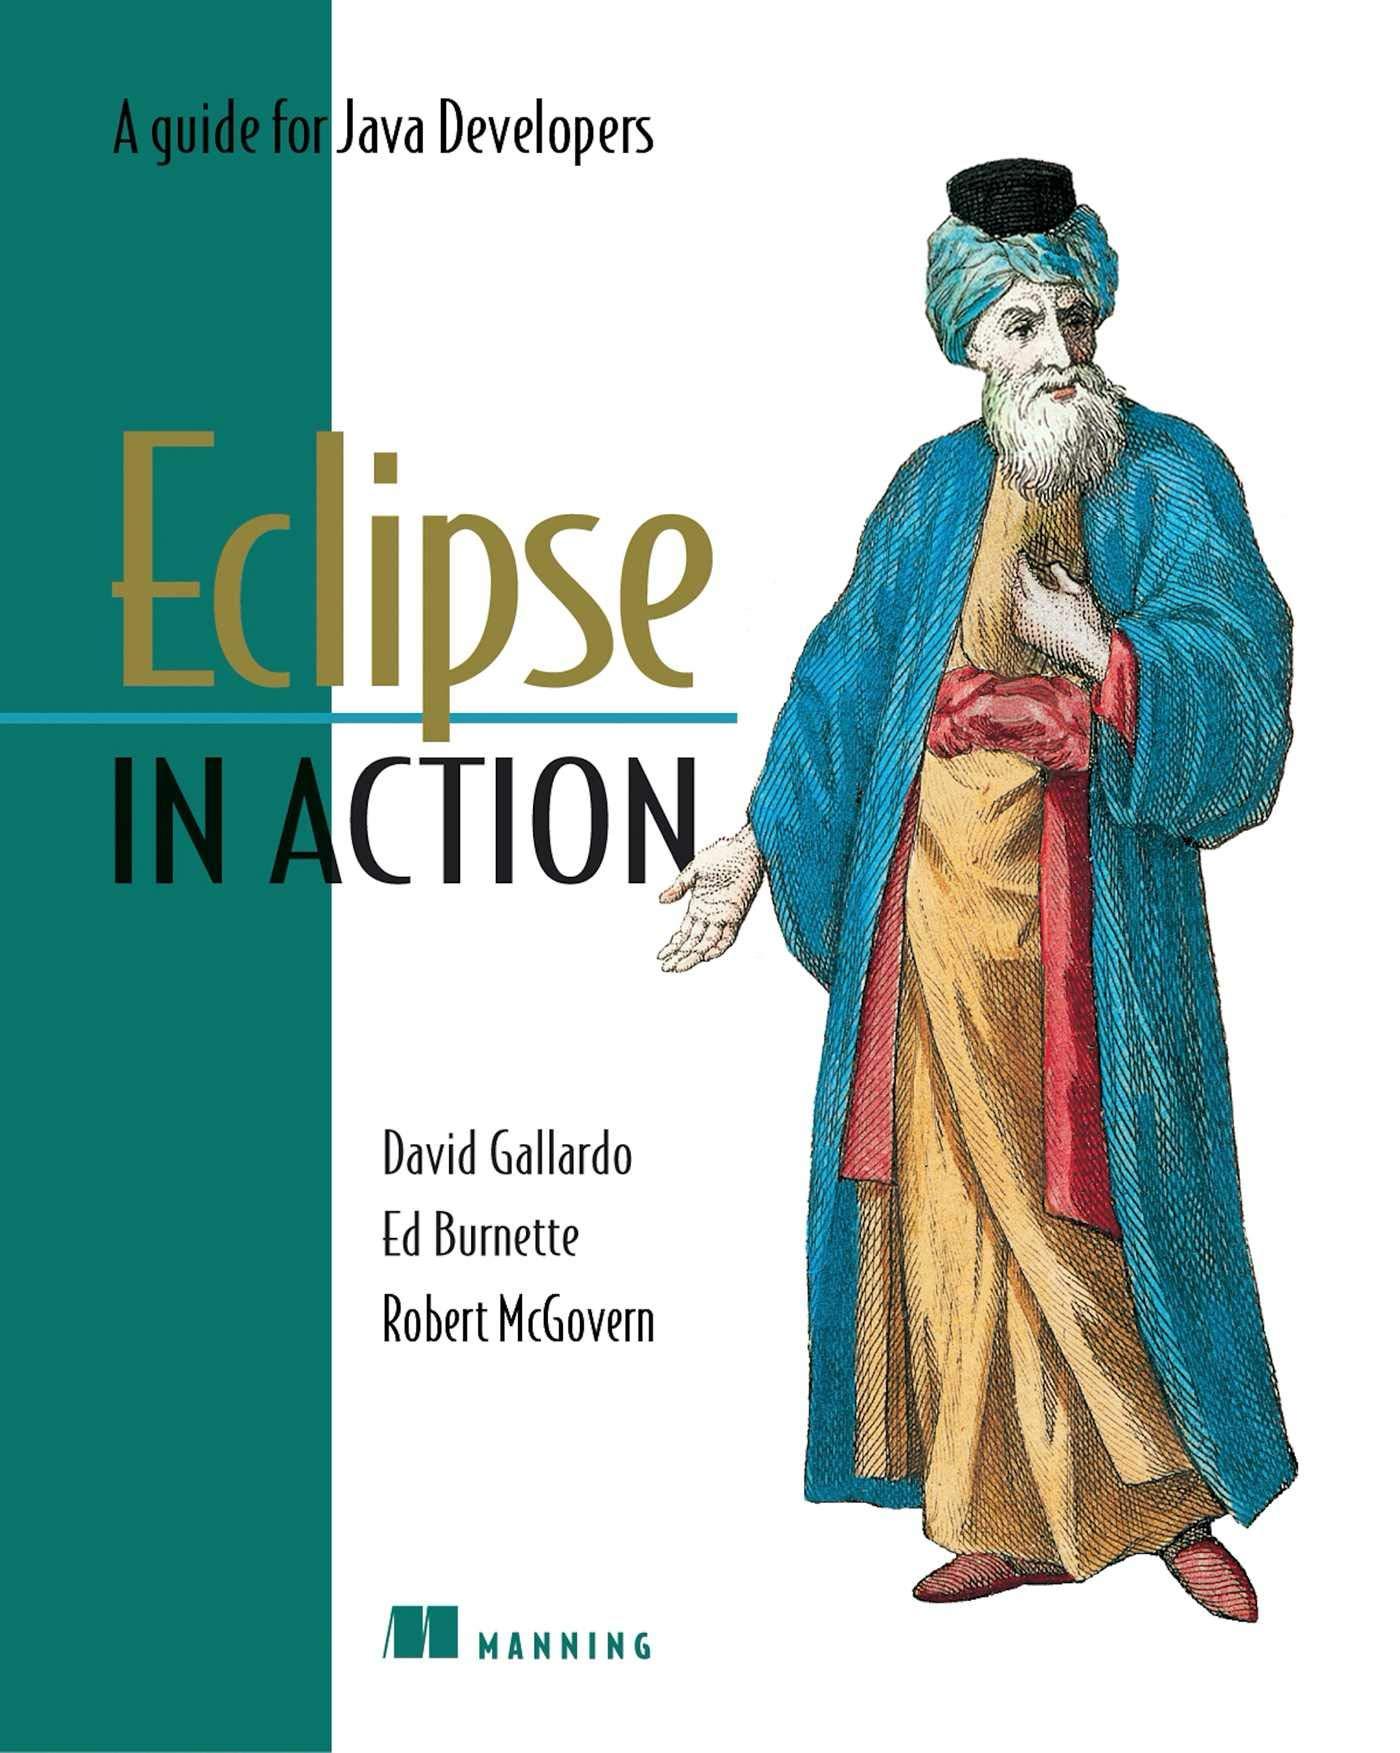 eclipse in action a guide for the java developer 7th edition david gallardo, ed burnette, robert mcgovern